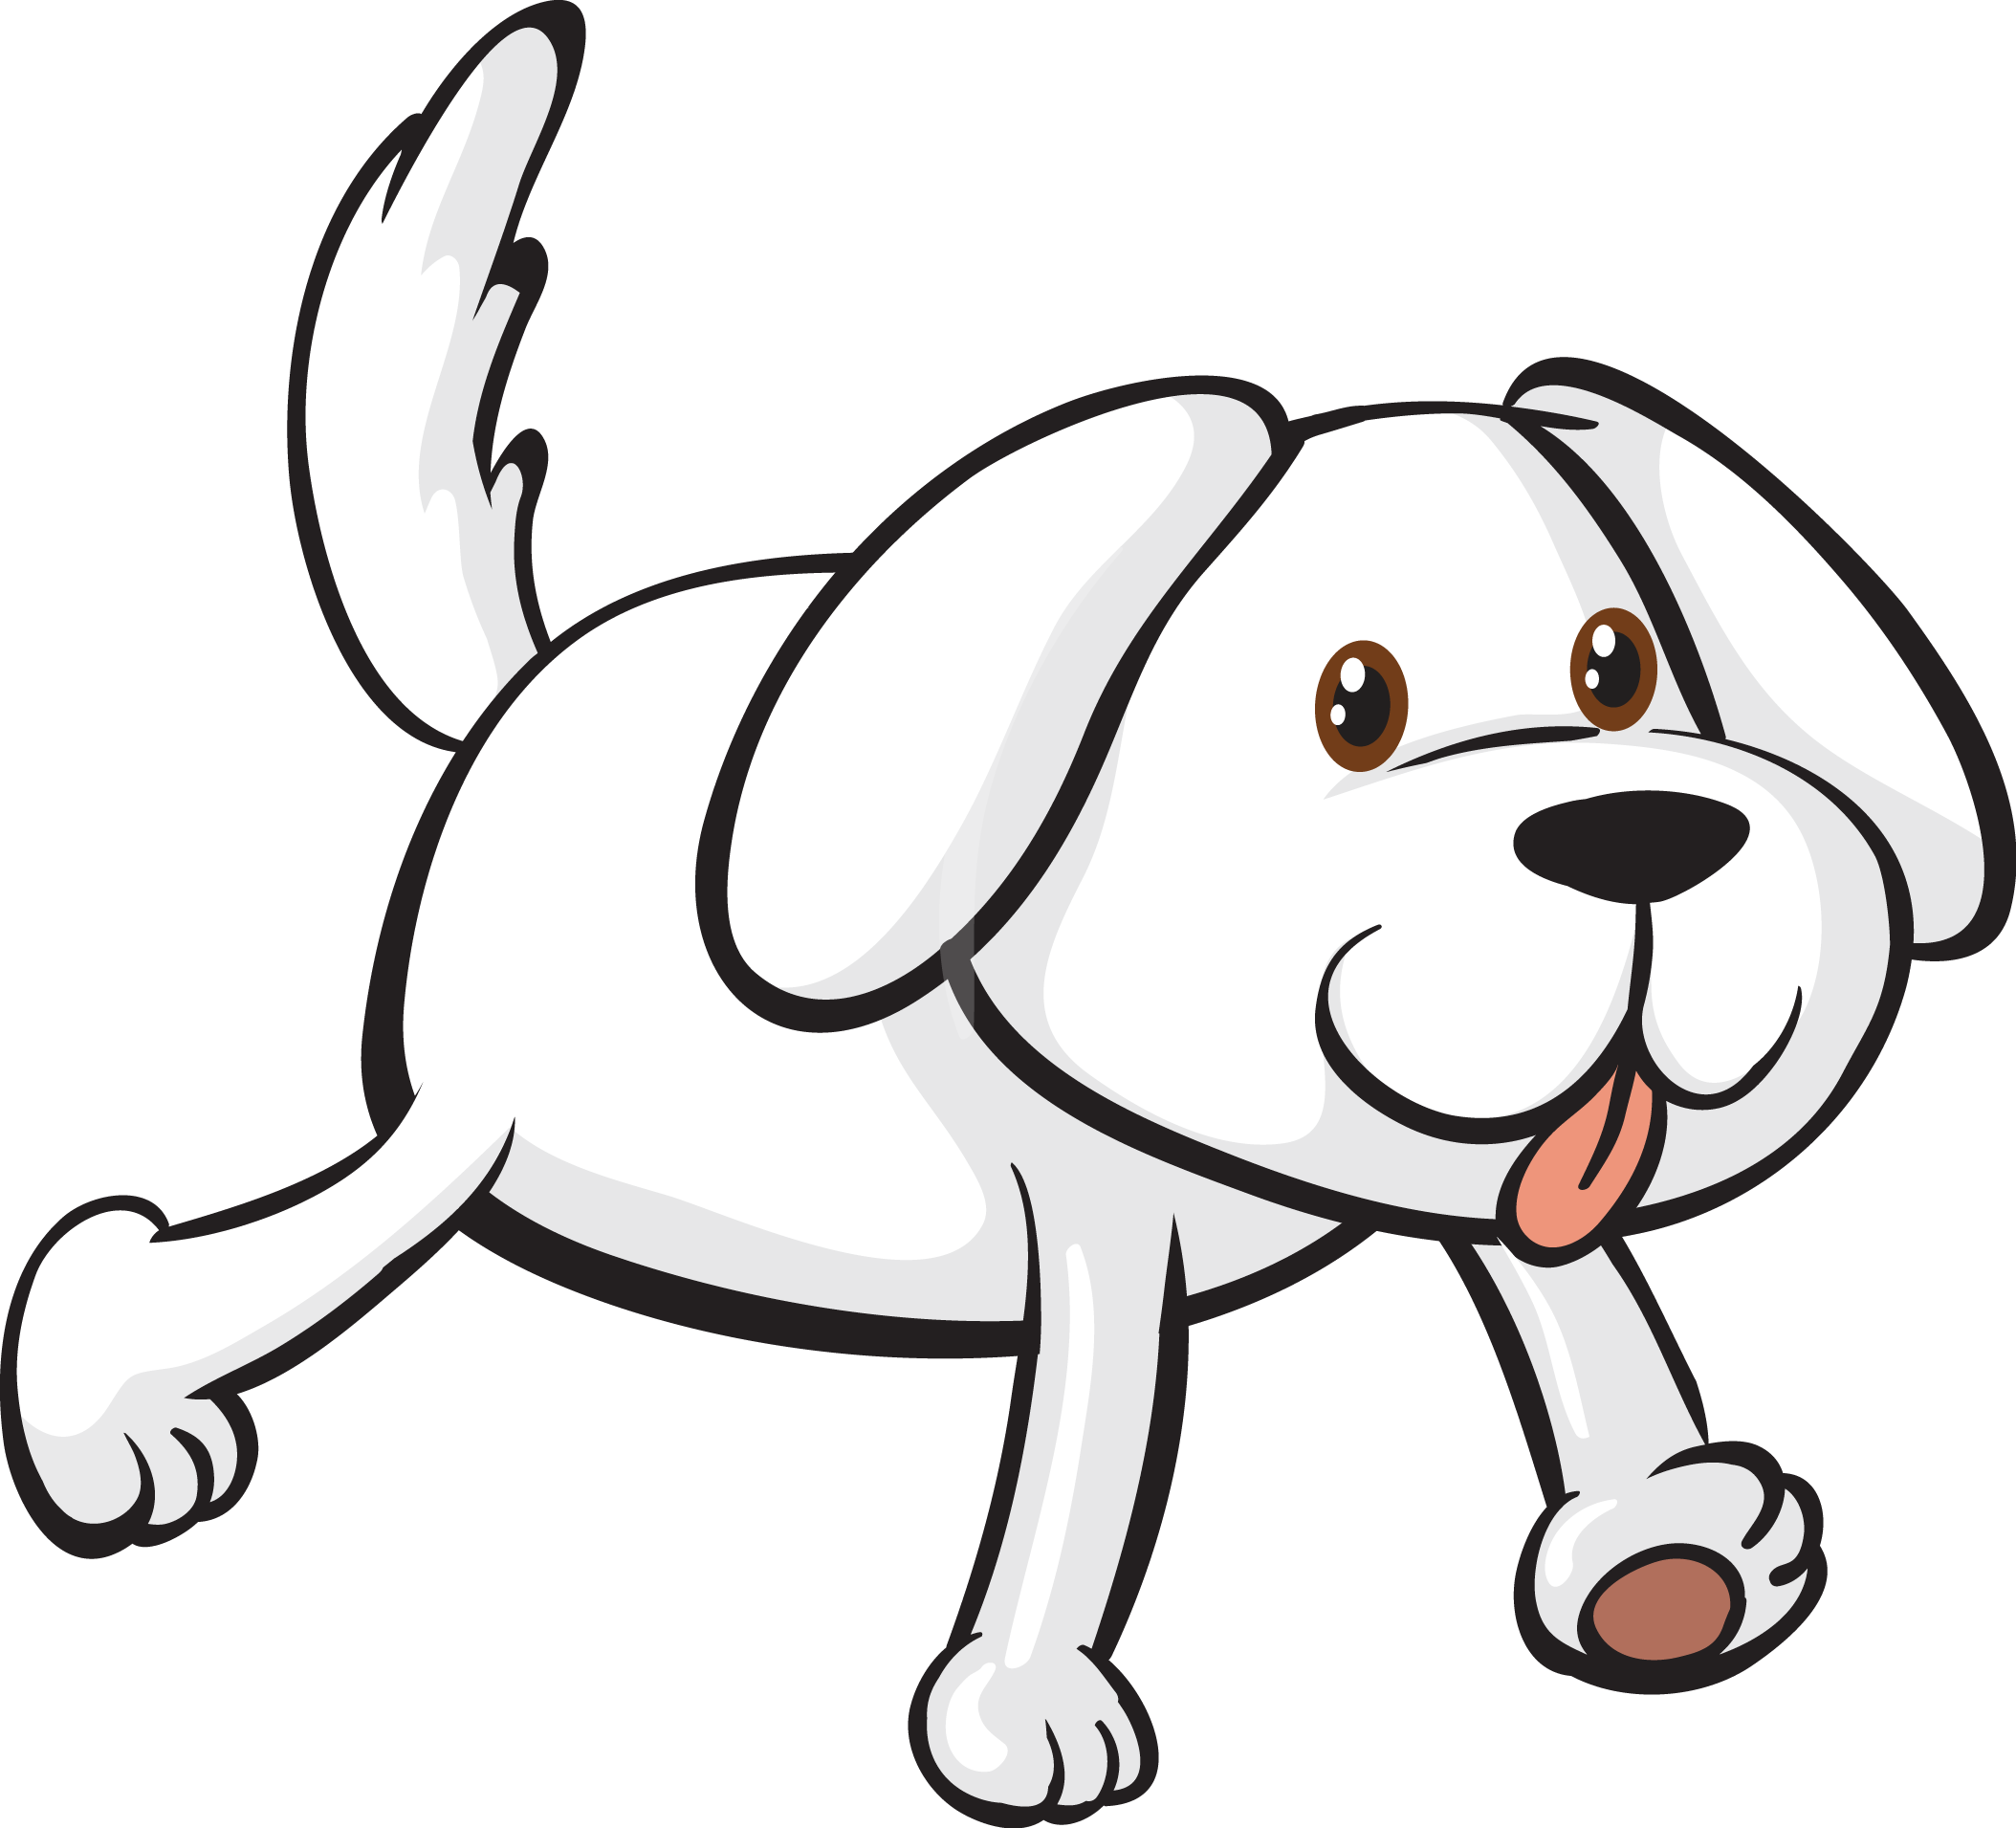 Maltese Dog Bichon Frise Puppy Clip Art Cartoon Cute - Maltese Dog Bichon Frise Puppy Clip Art Cartoon Cute (2108x1911)